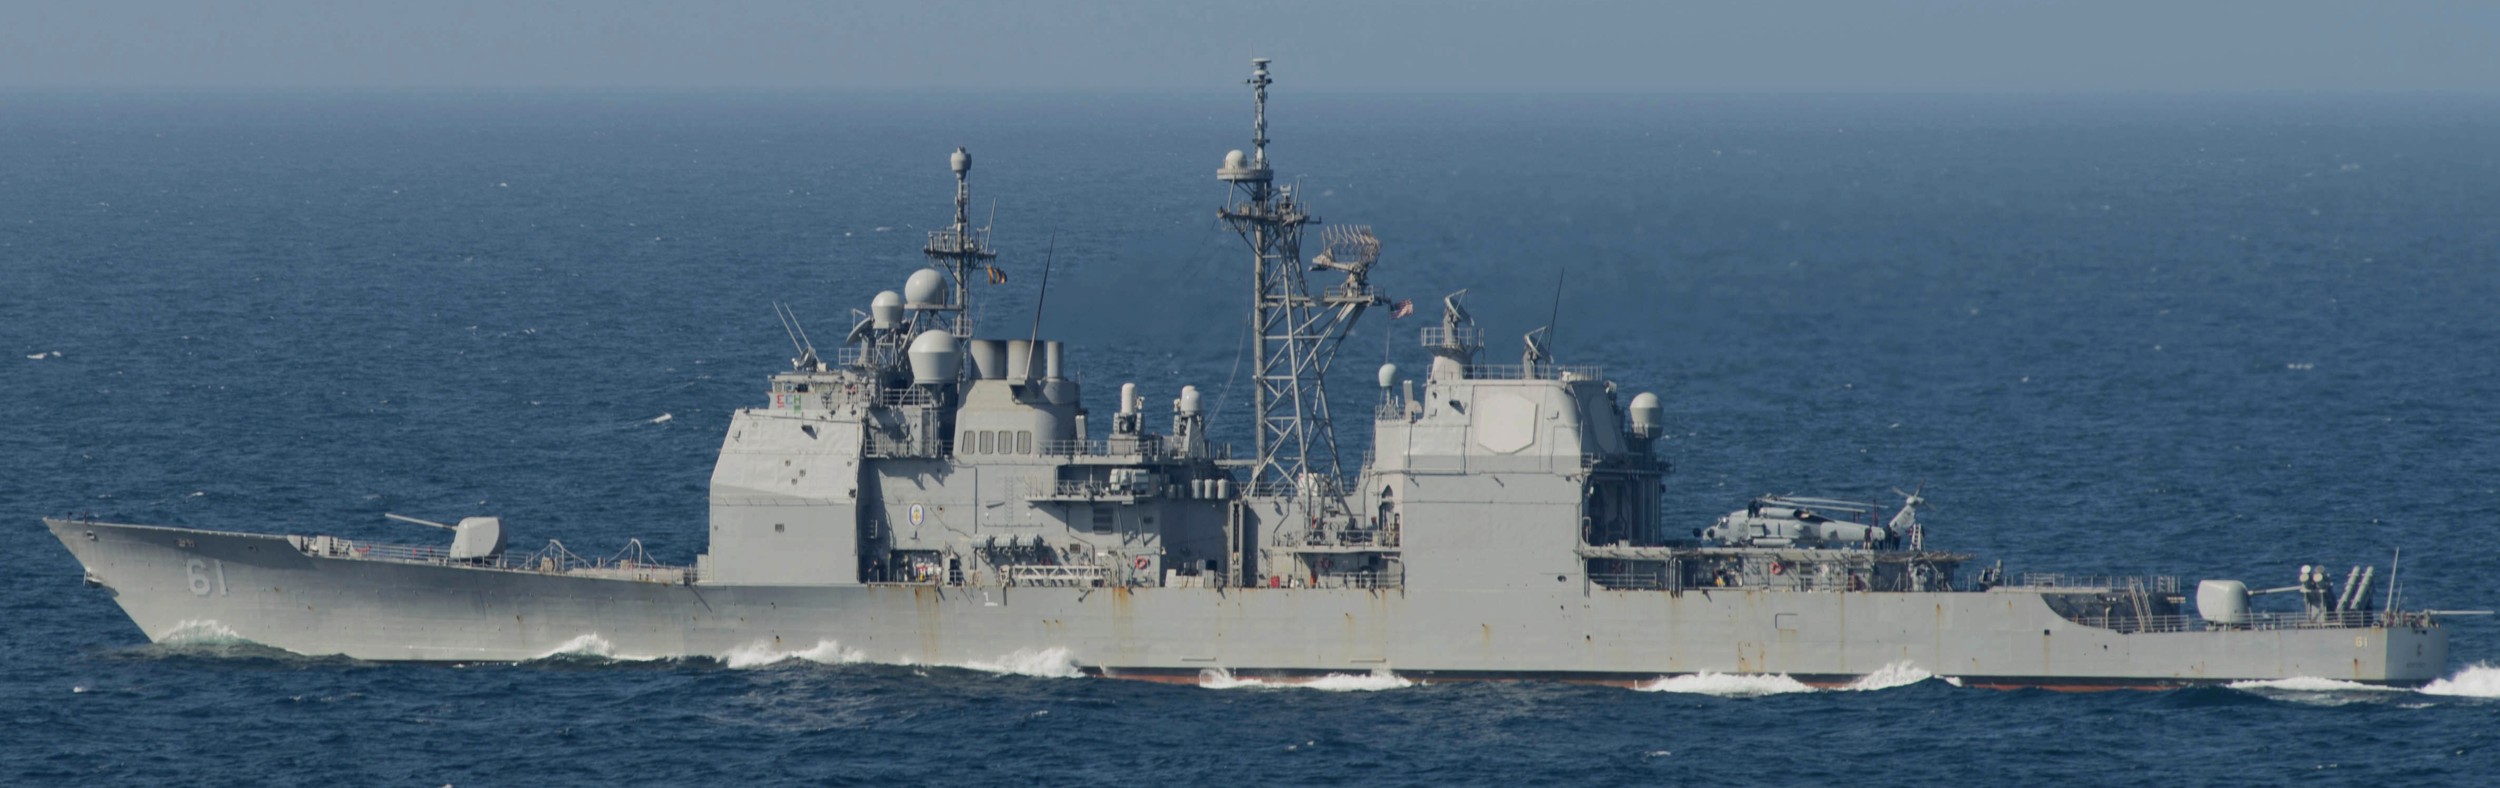 cg-61 uss monterey ticonderoga class guided missile cruiser aegis us navy 78